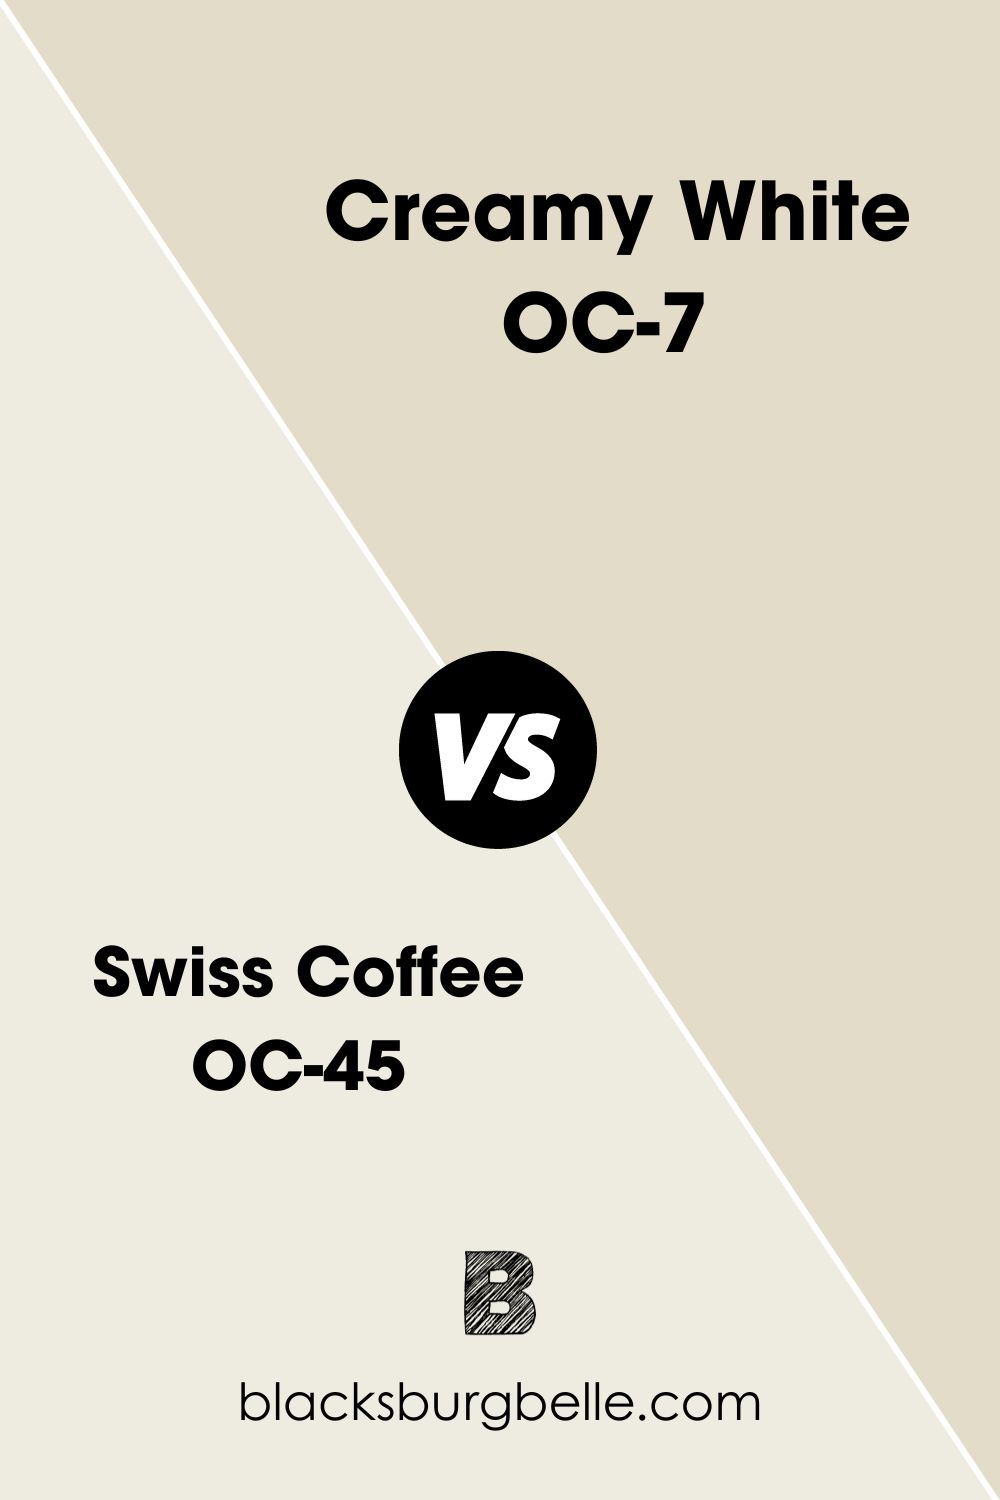 Swiss Coffee OC-45 